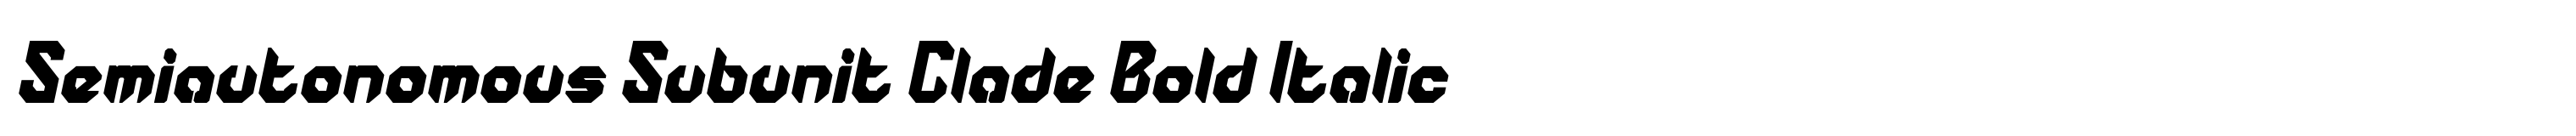 Semiautonomous Subunit Clade Bold Italic